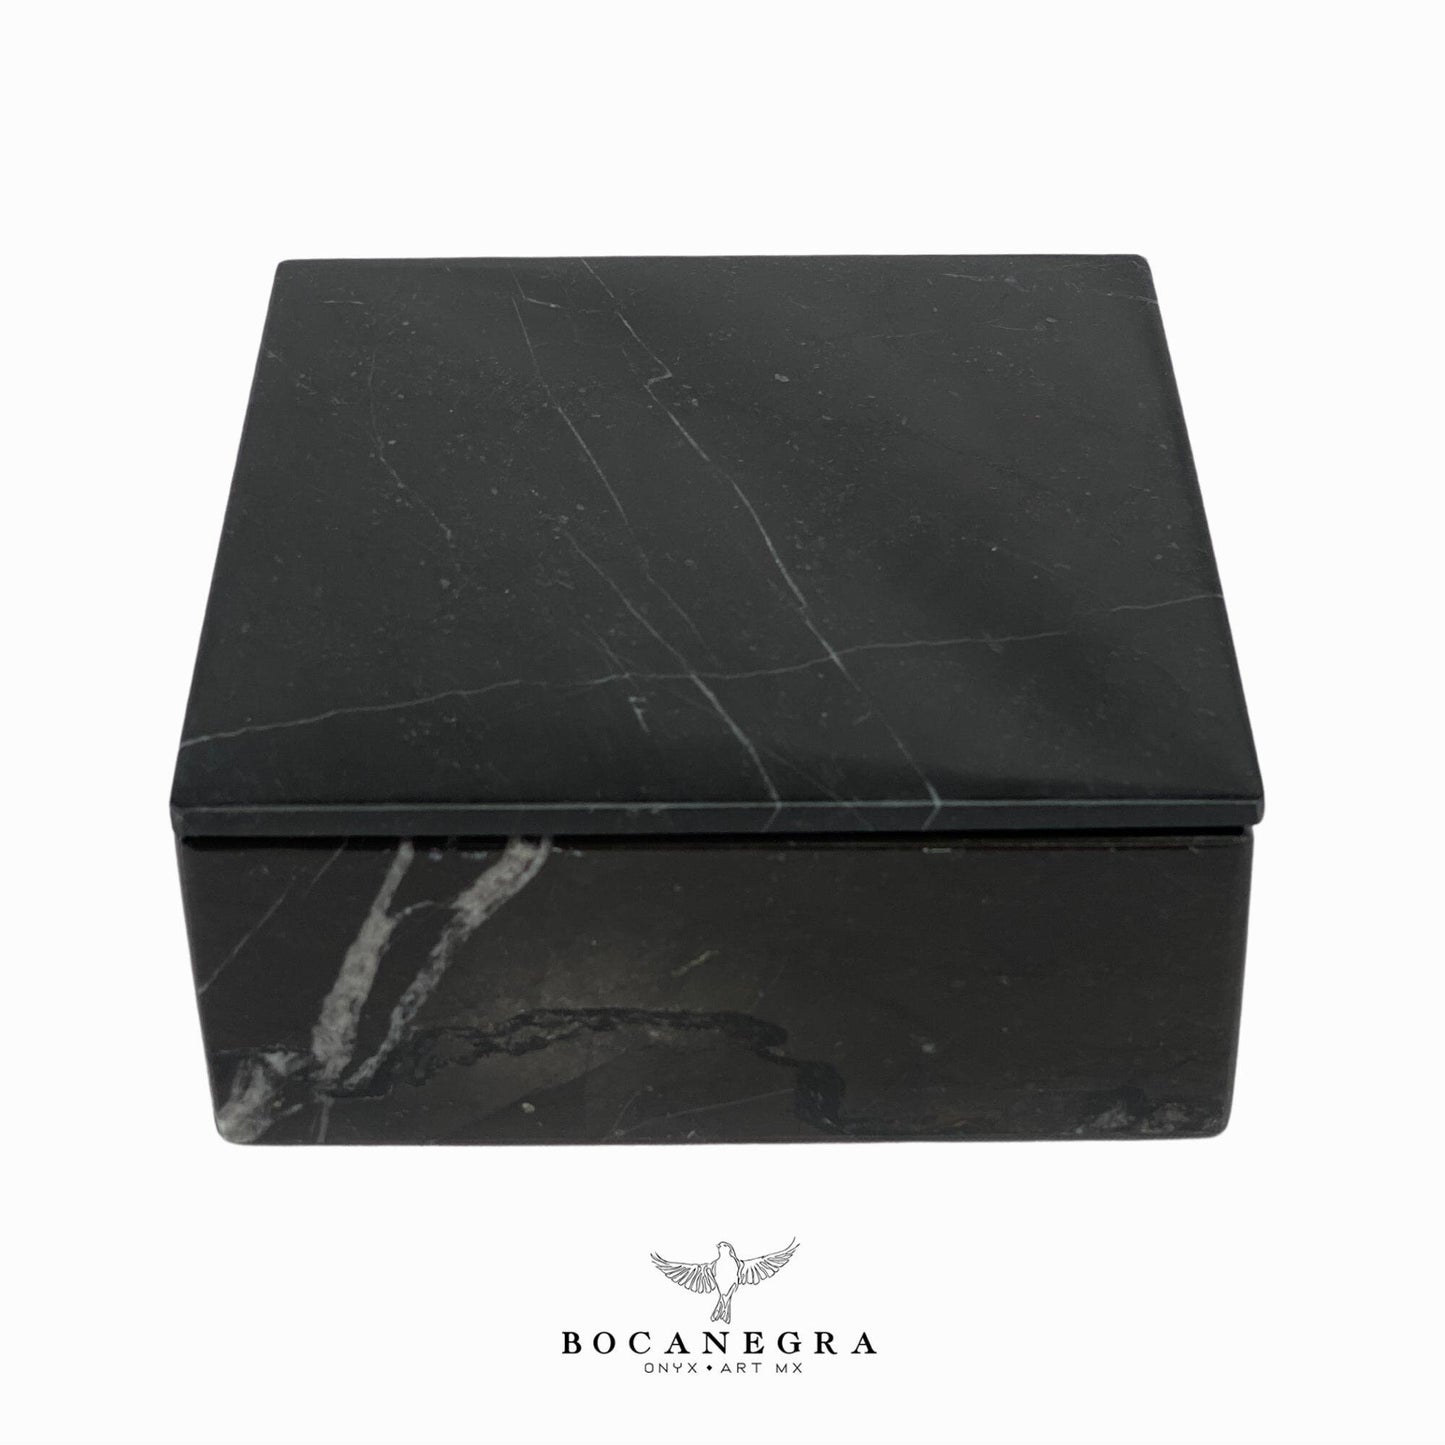 Black Marble Square Jewelry Box - Organizer - Storage Box